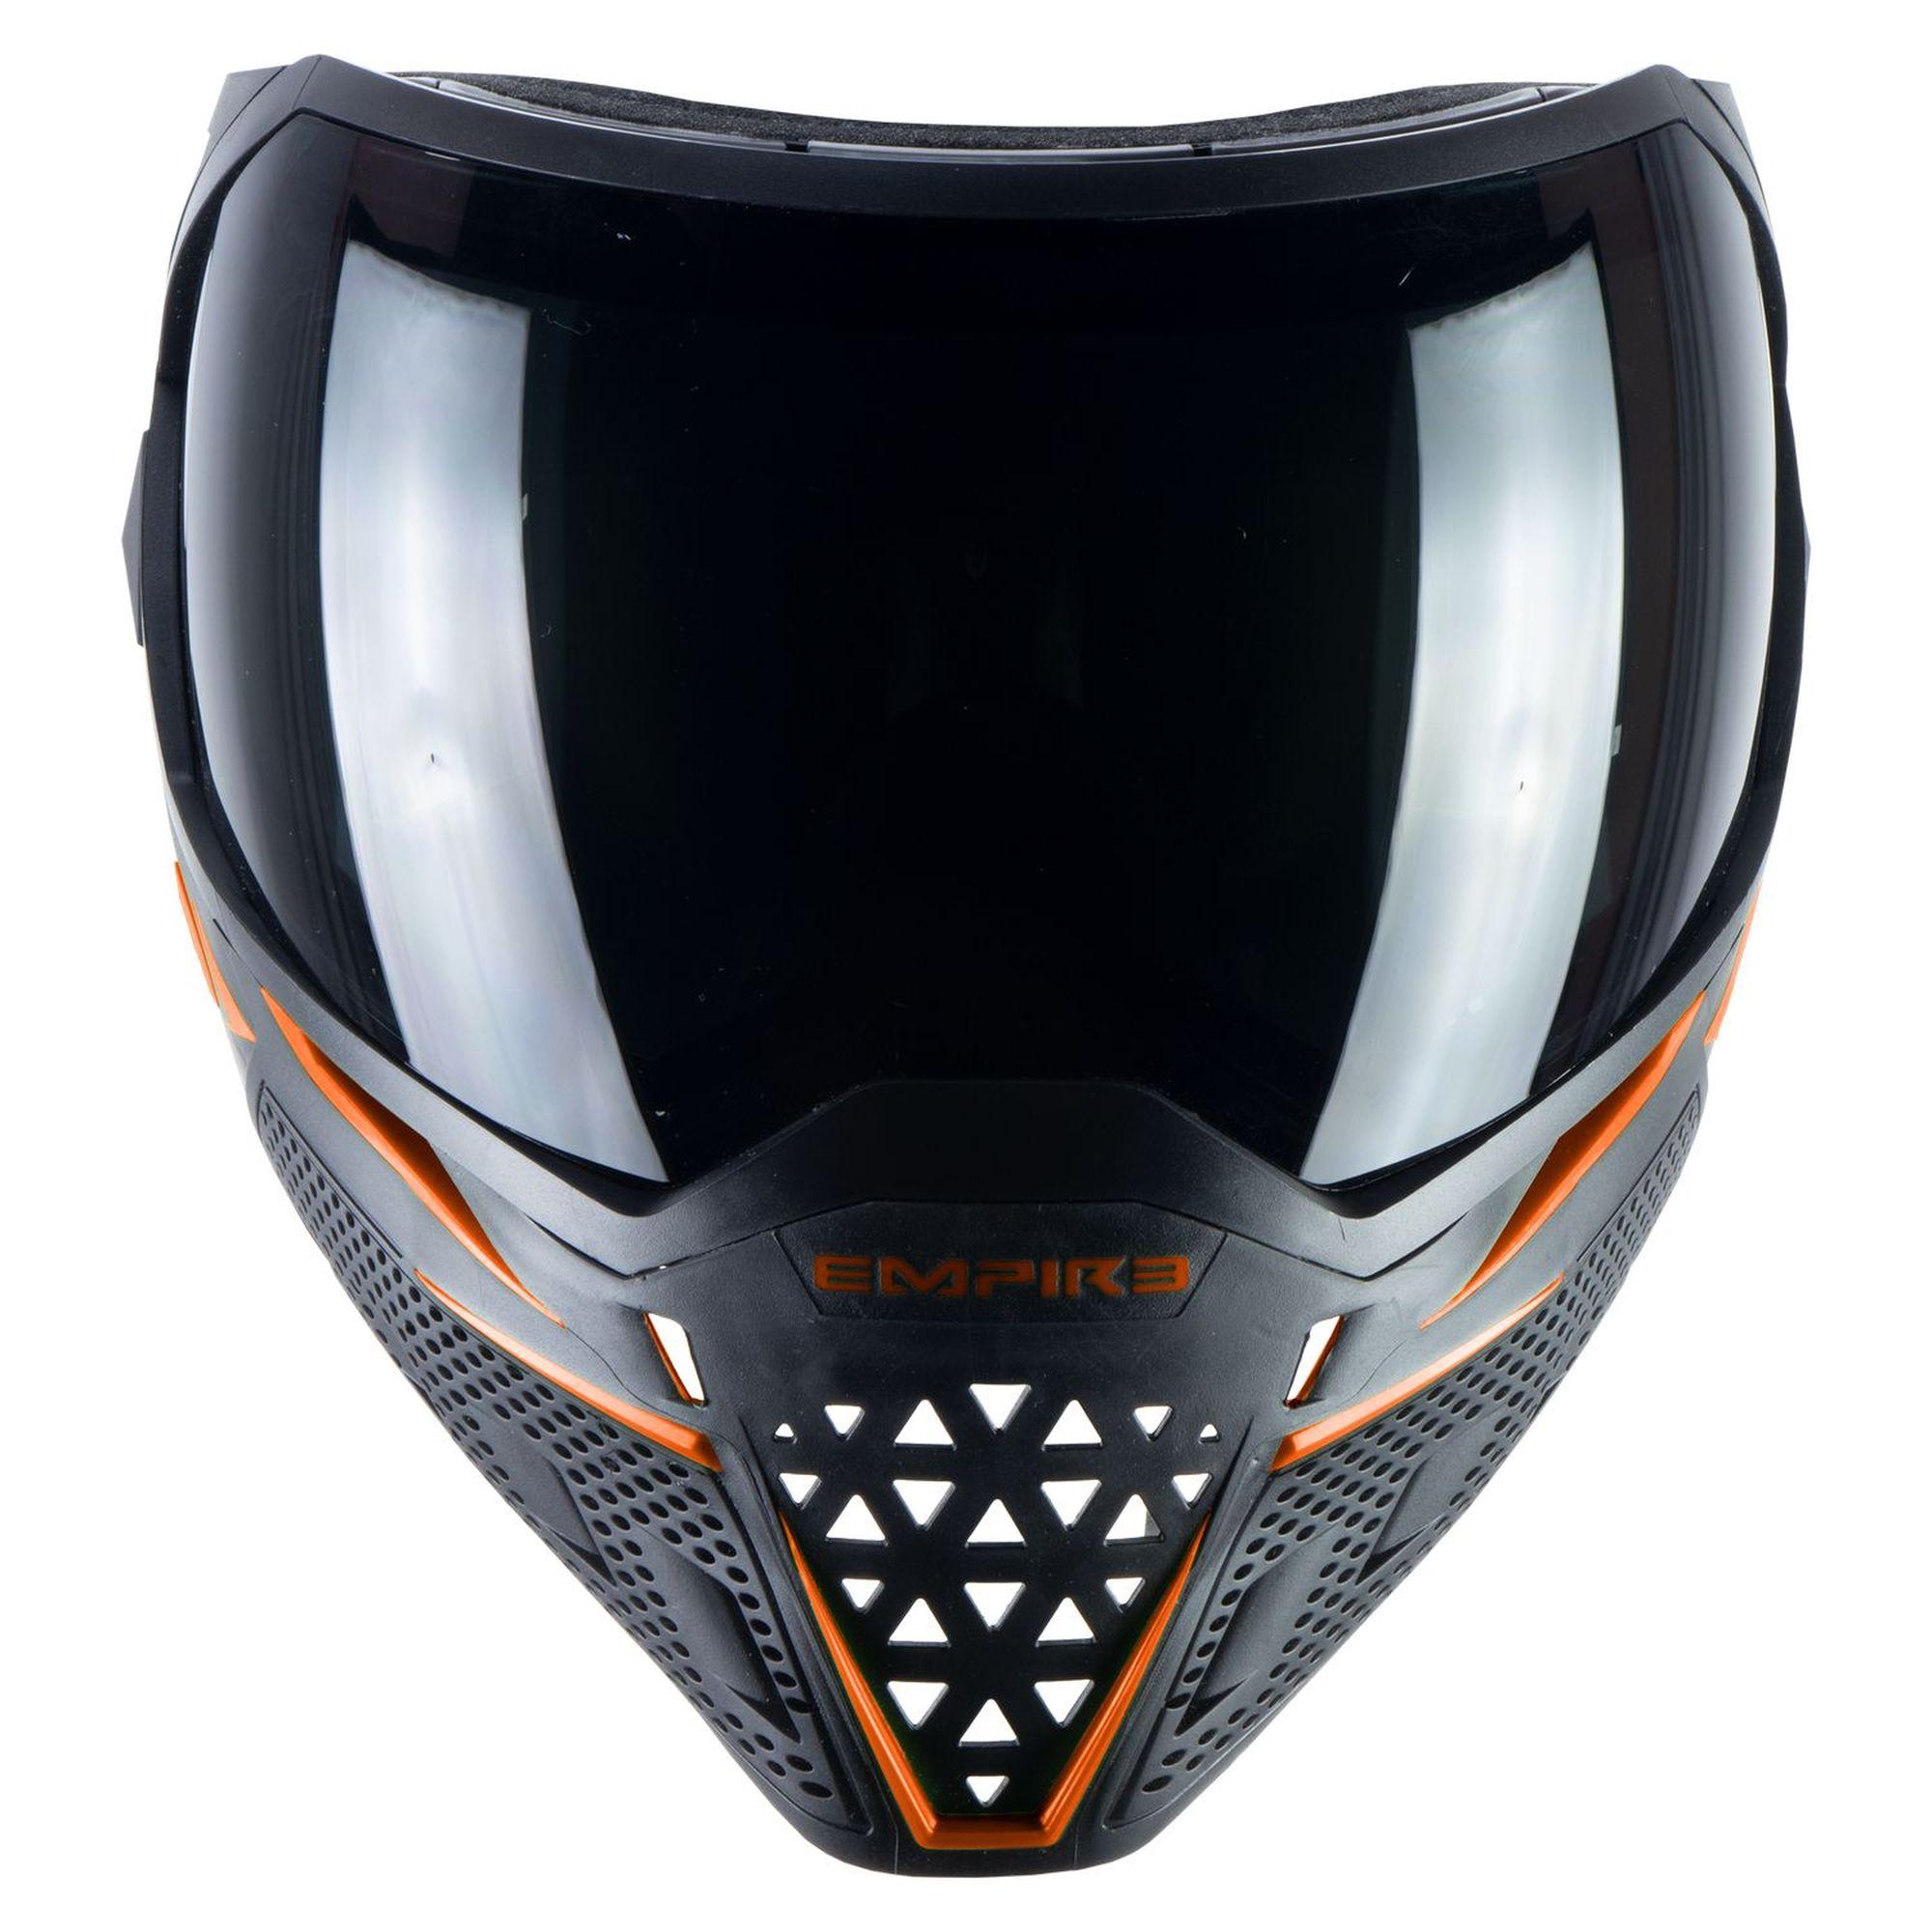 Empire EVS Paintball Thermal Goggle SE Blk/Orange, Black